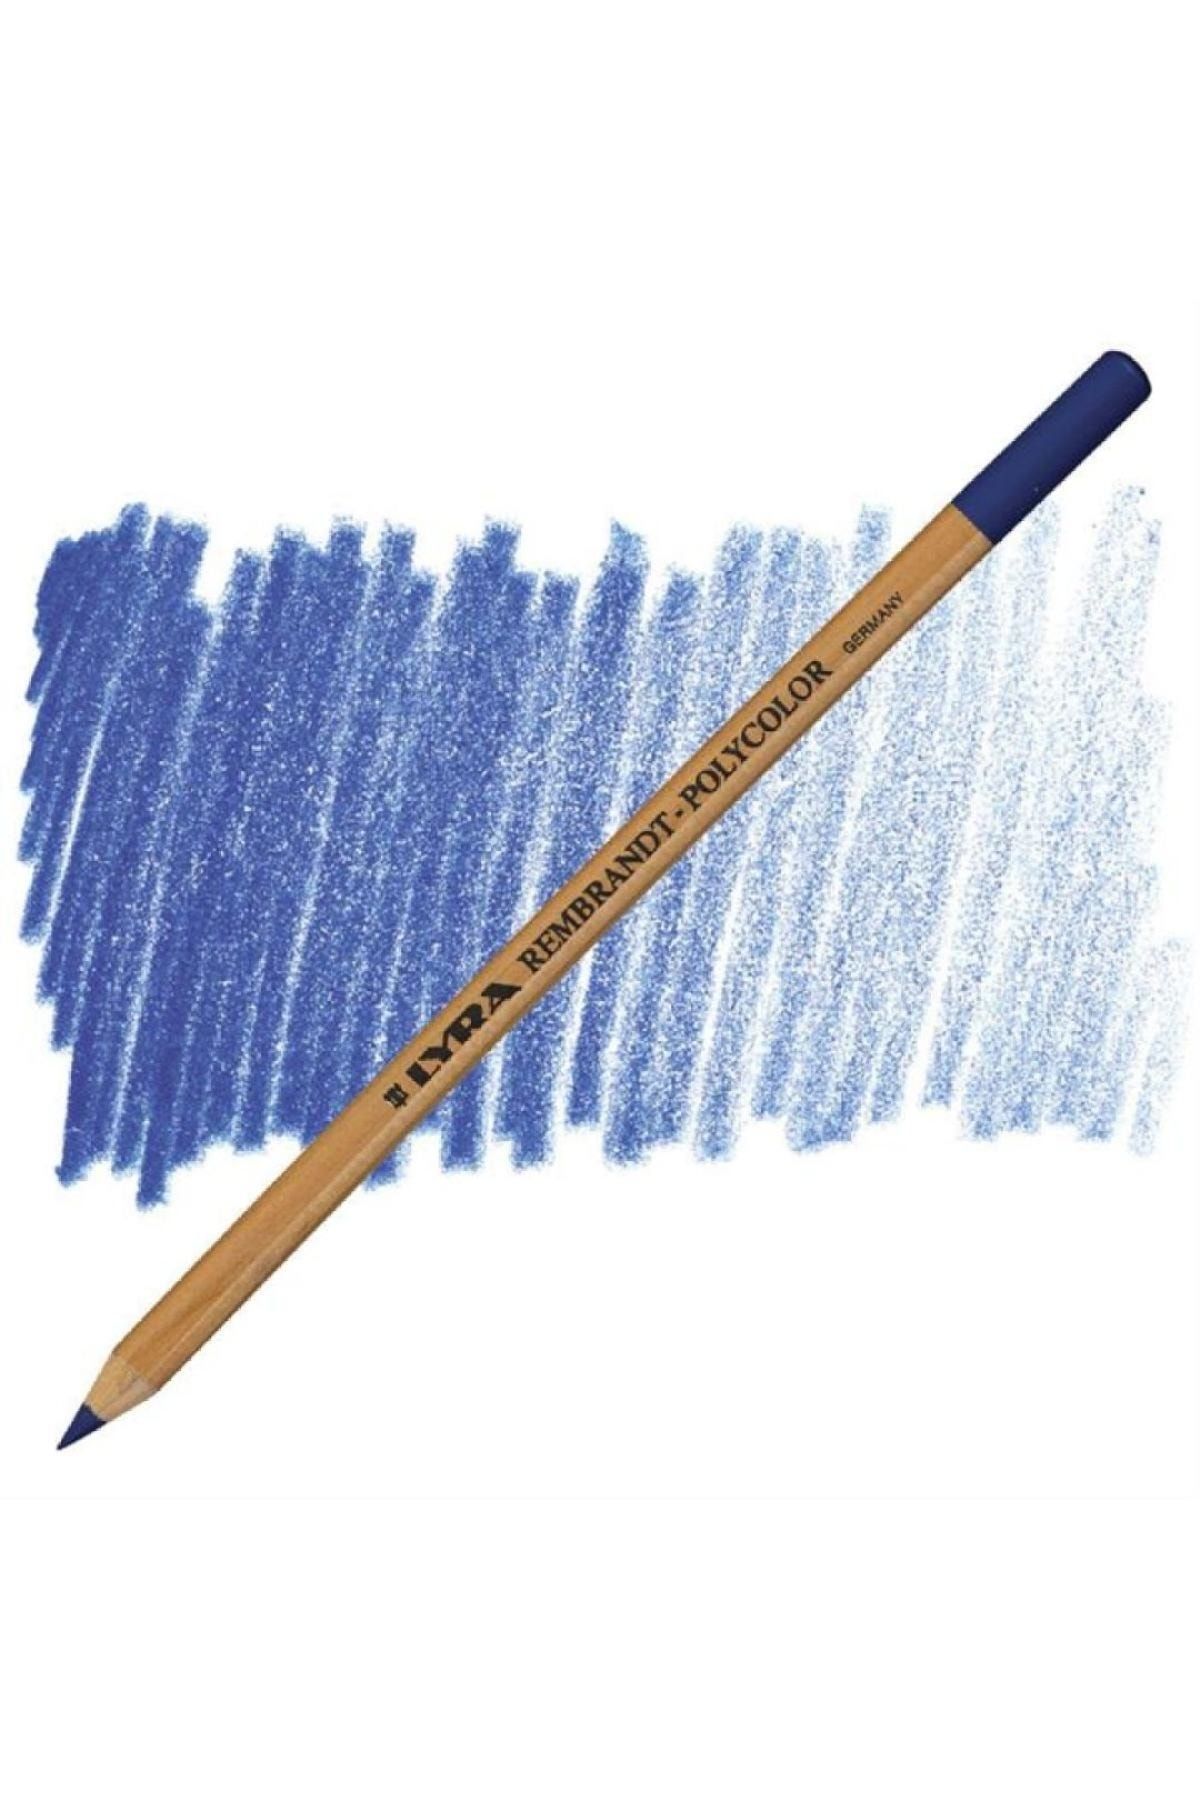 Lyra Rembrandt Polycolor Prof. Kuru Boya Kalemi Light Cobalt Blue 44